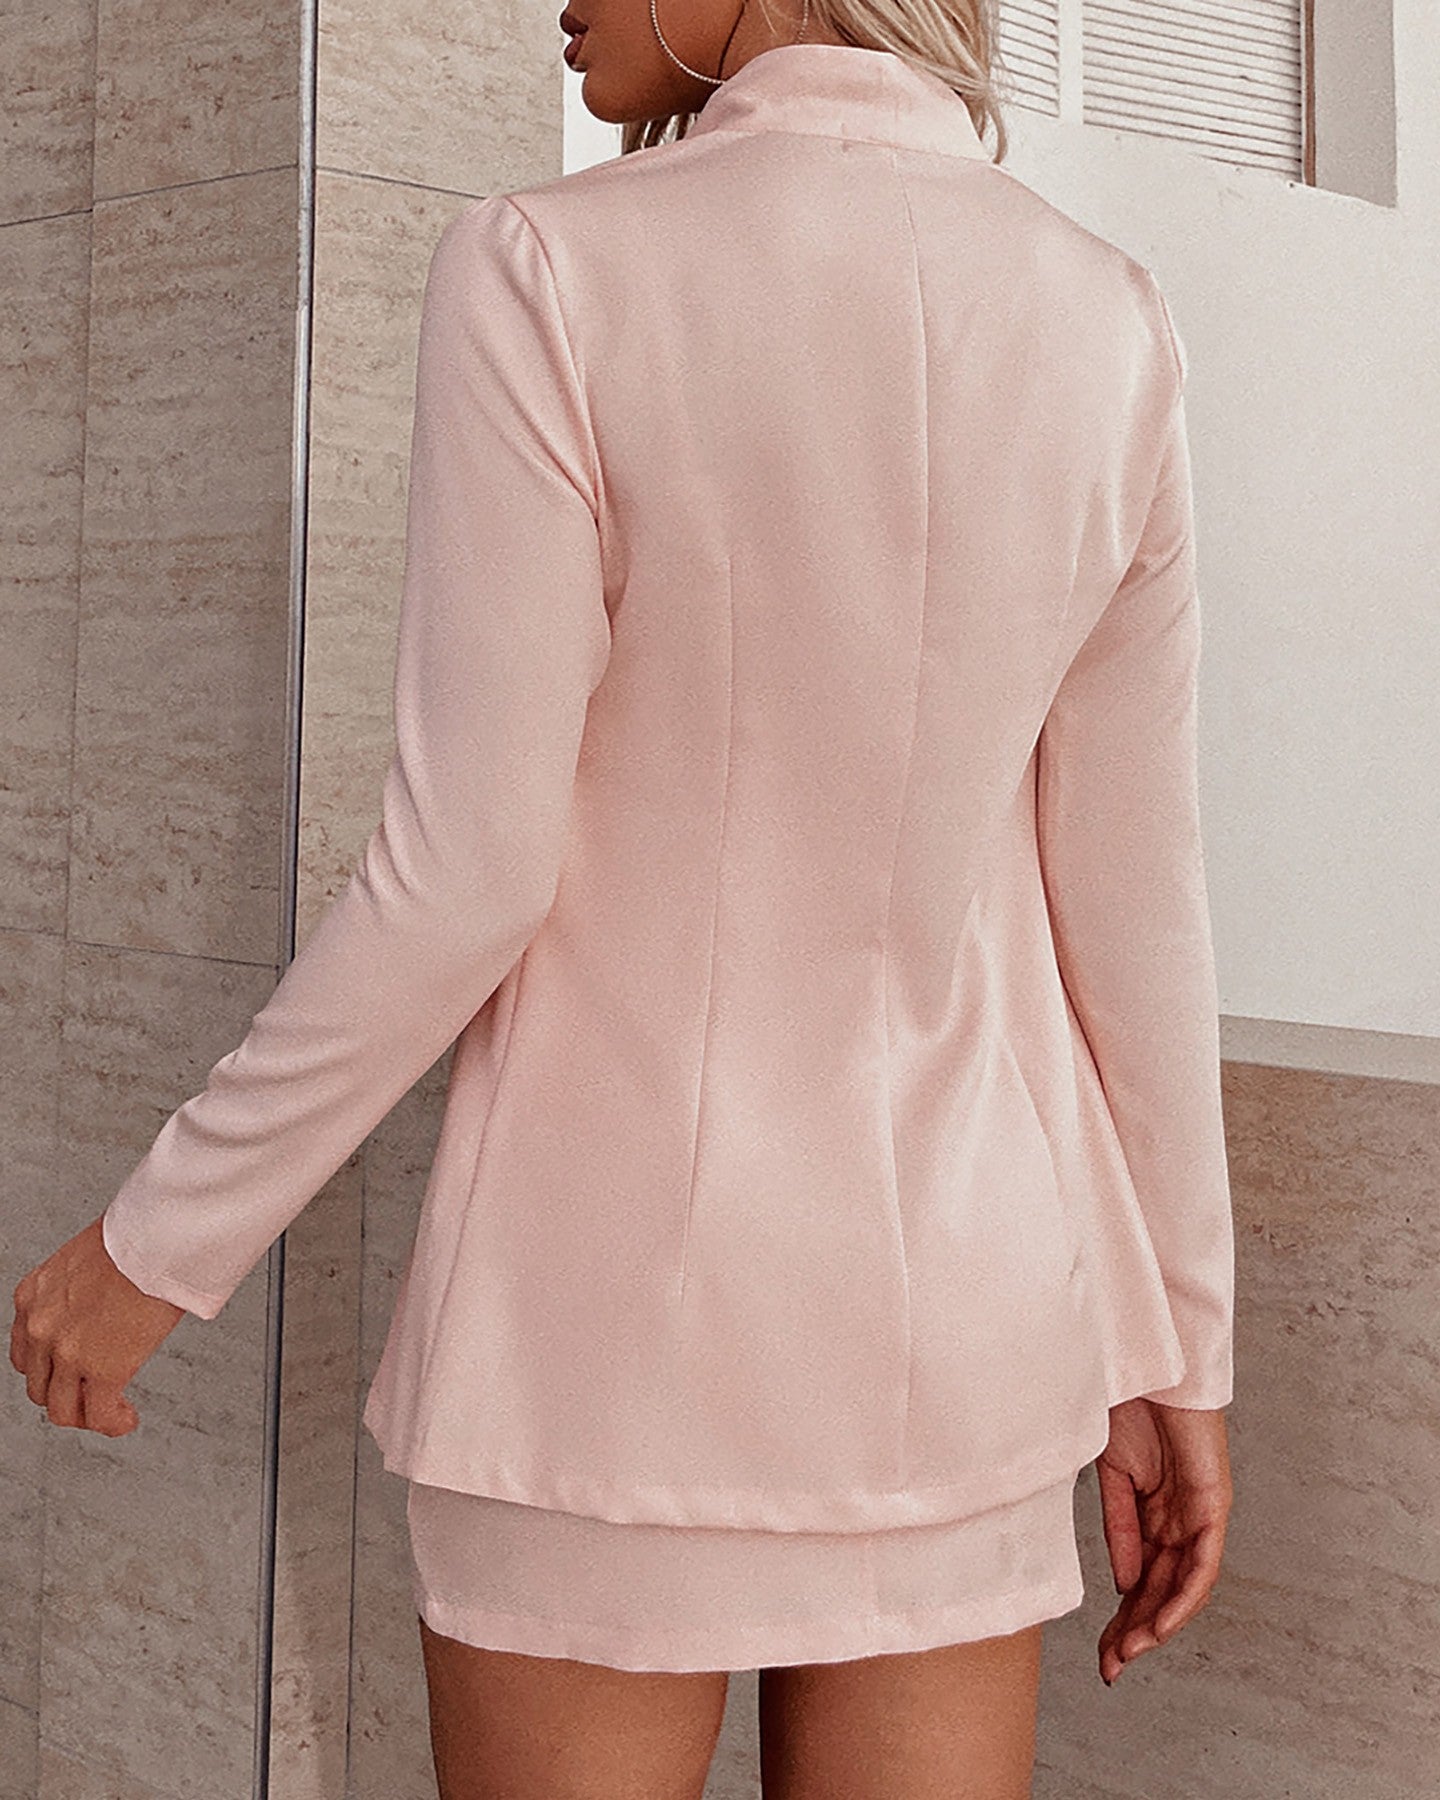 Long Sleeve Blazer Coat & Pockets Skirt Set